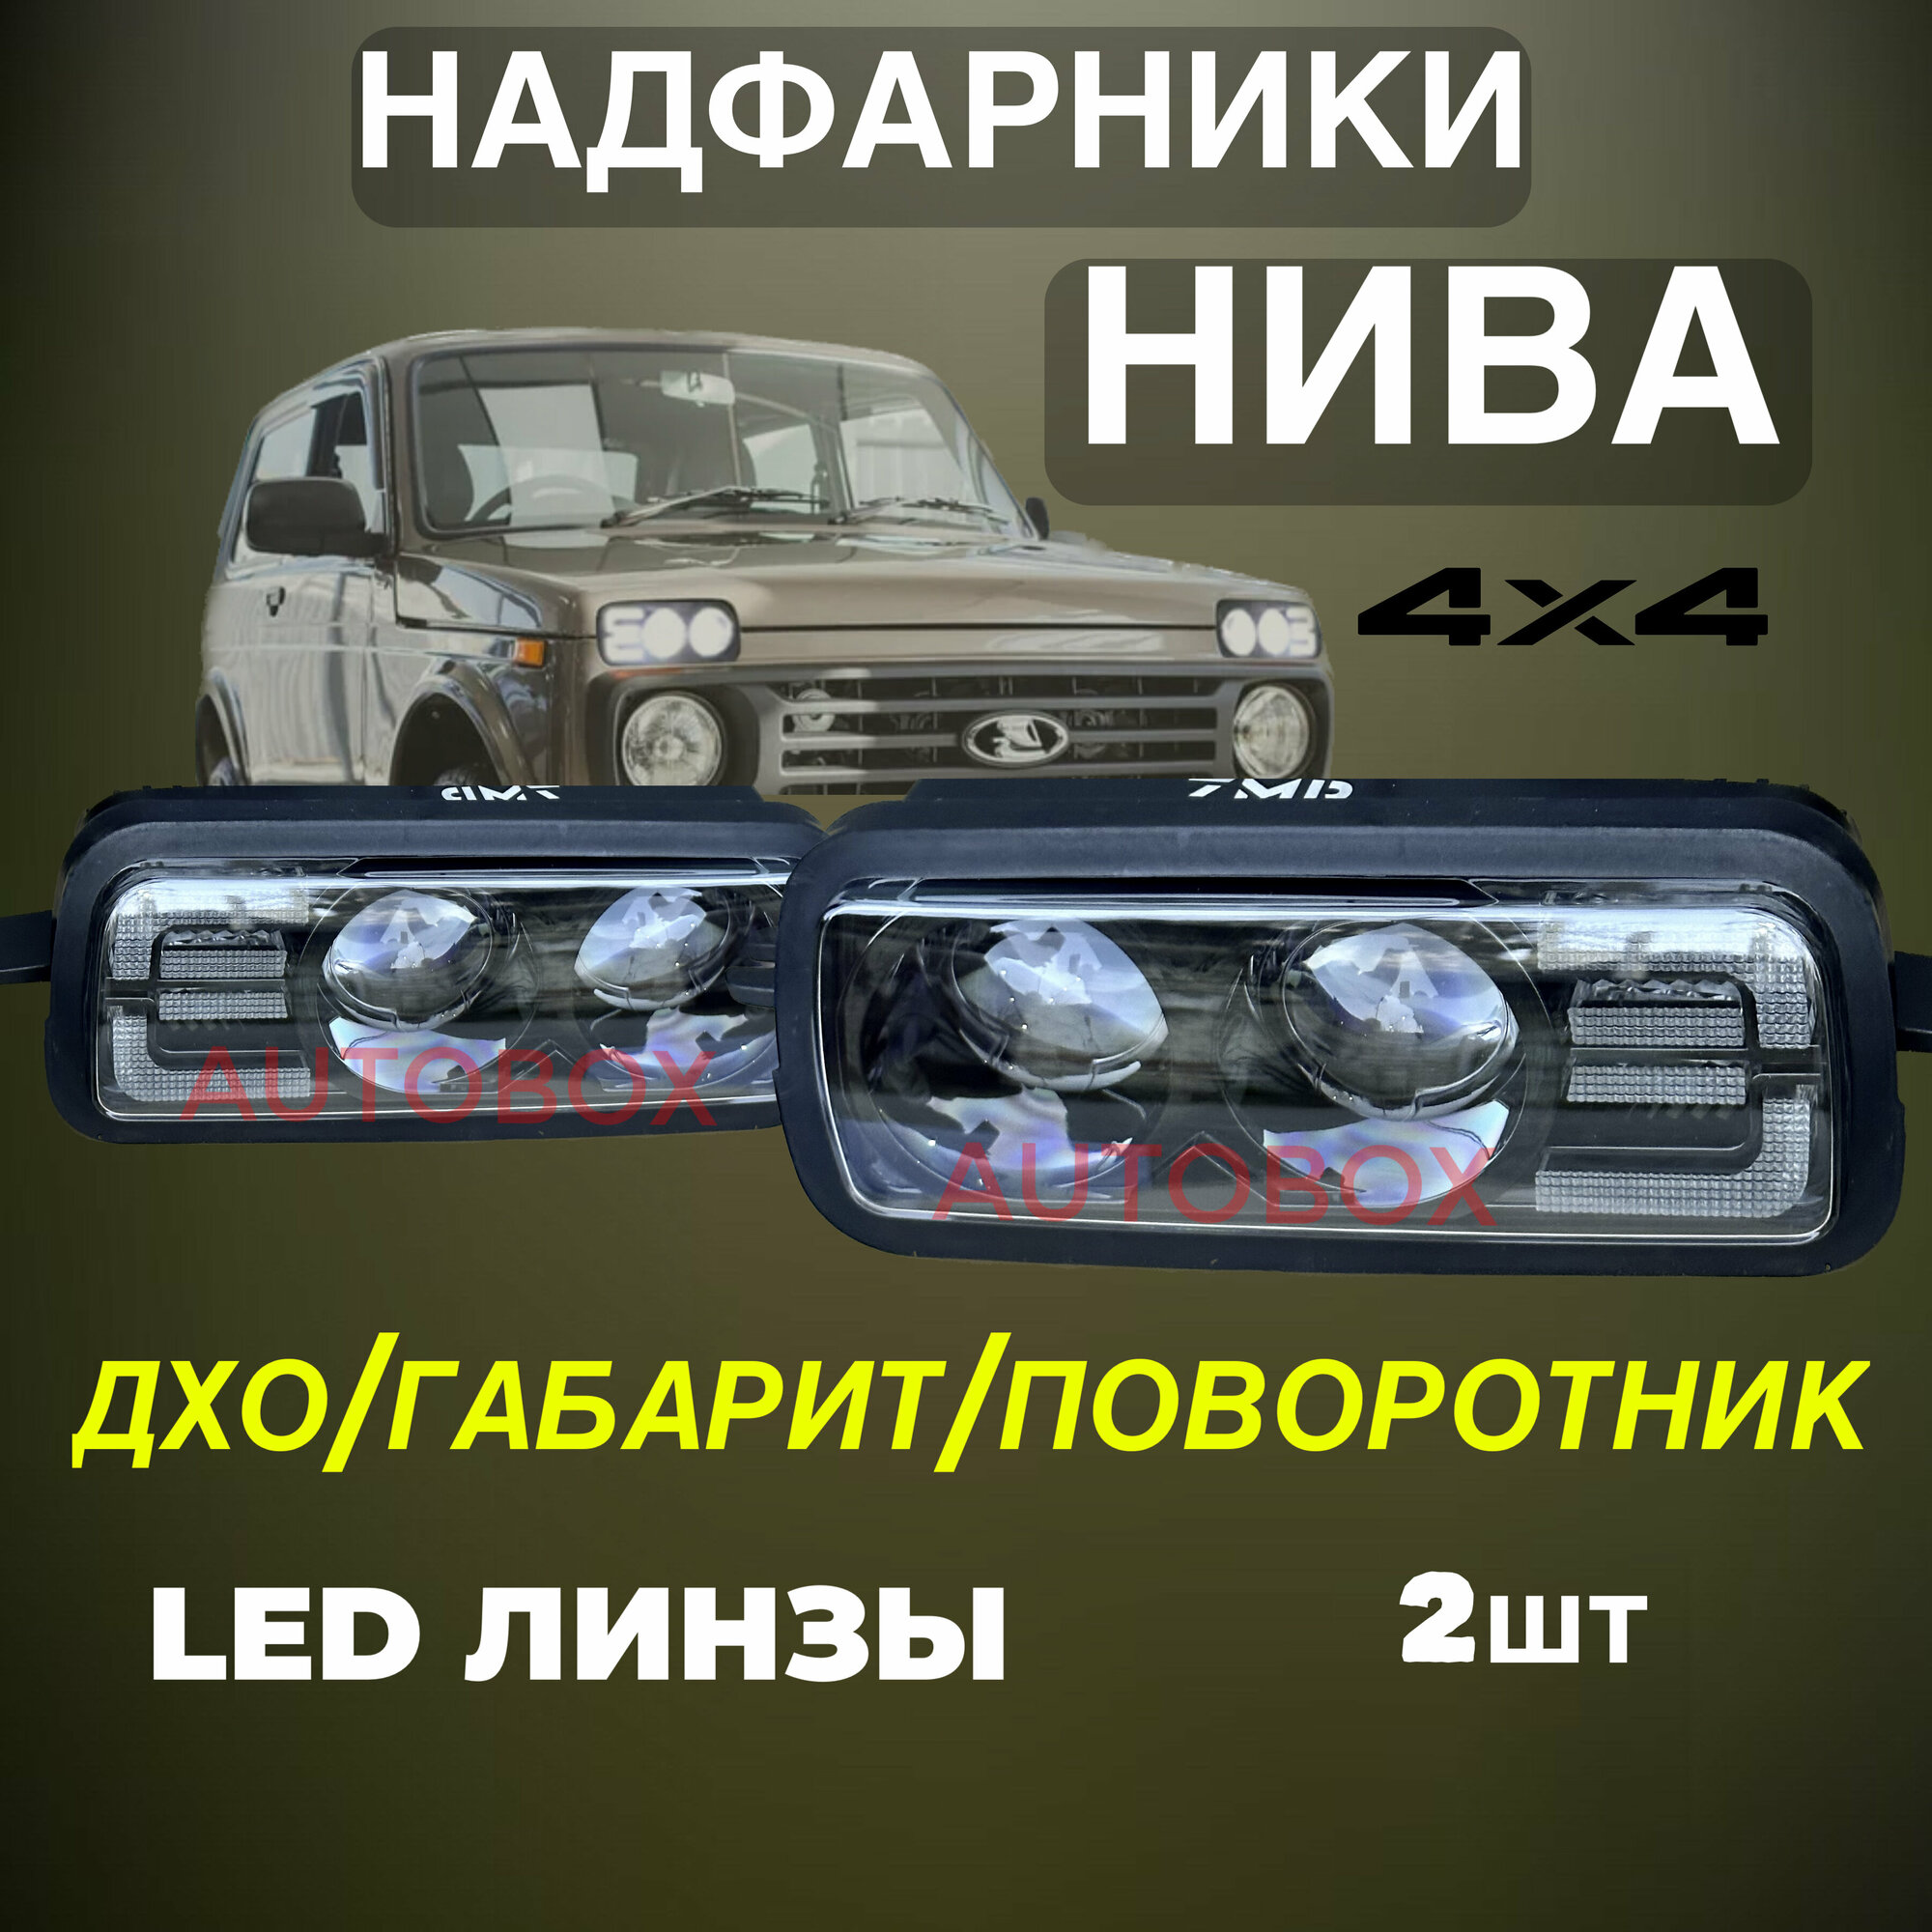 "Led Niva" - надфарники и противотуманные фары для Lada Niva 4x4